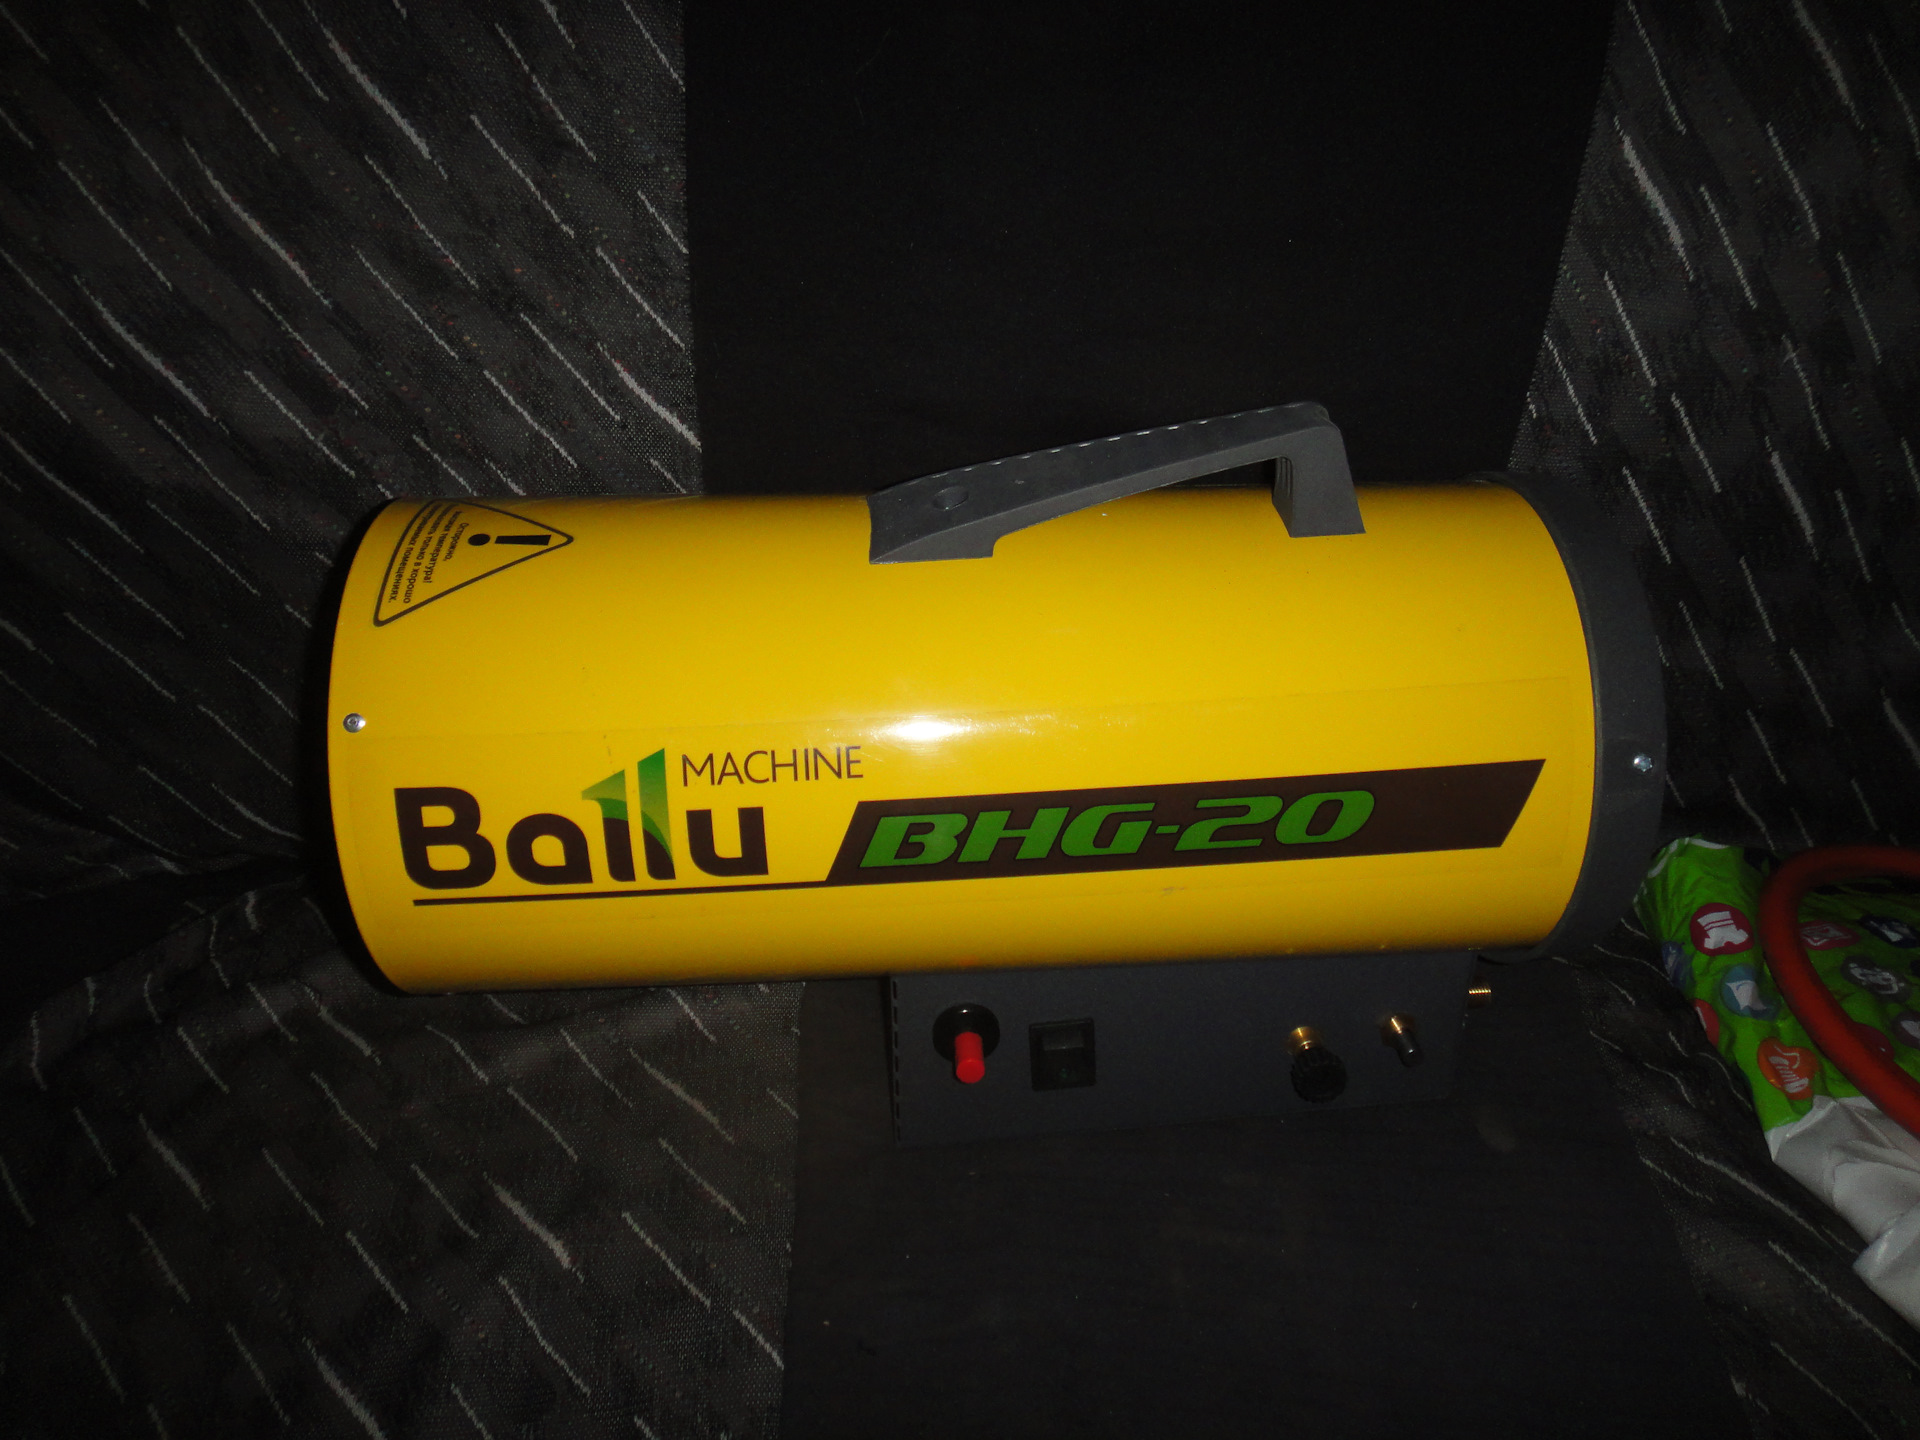 Ballu bhg 20. Ballu BHG-85 2013.